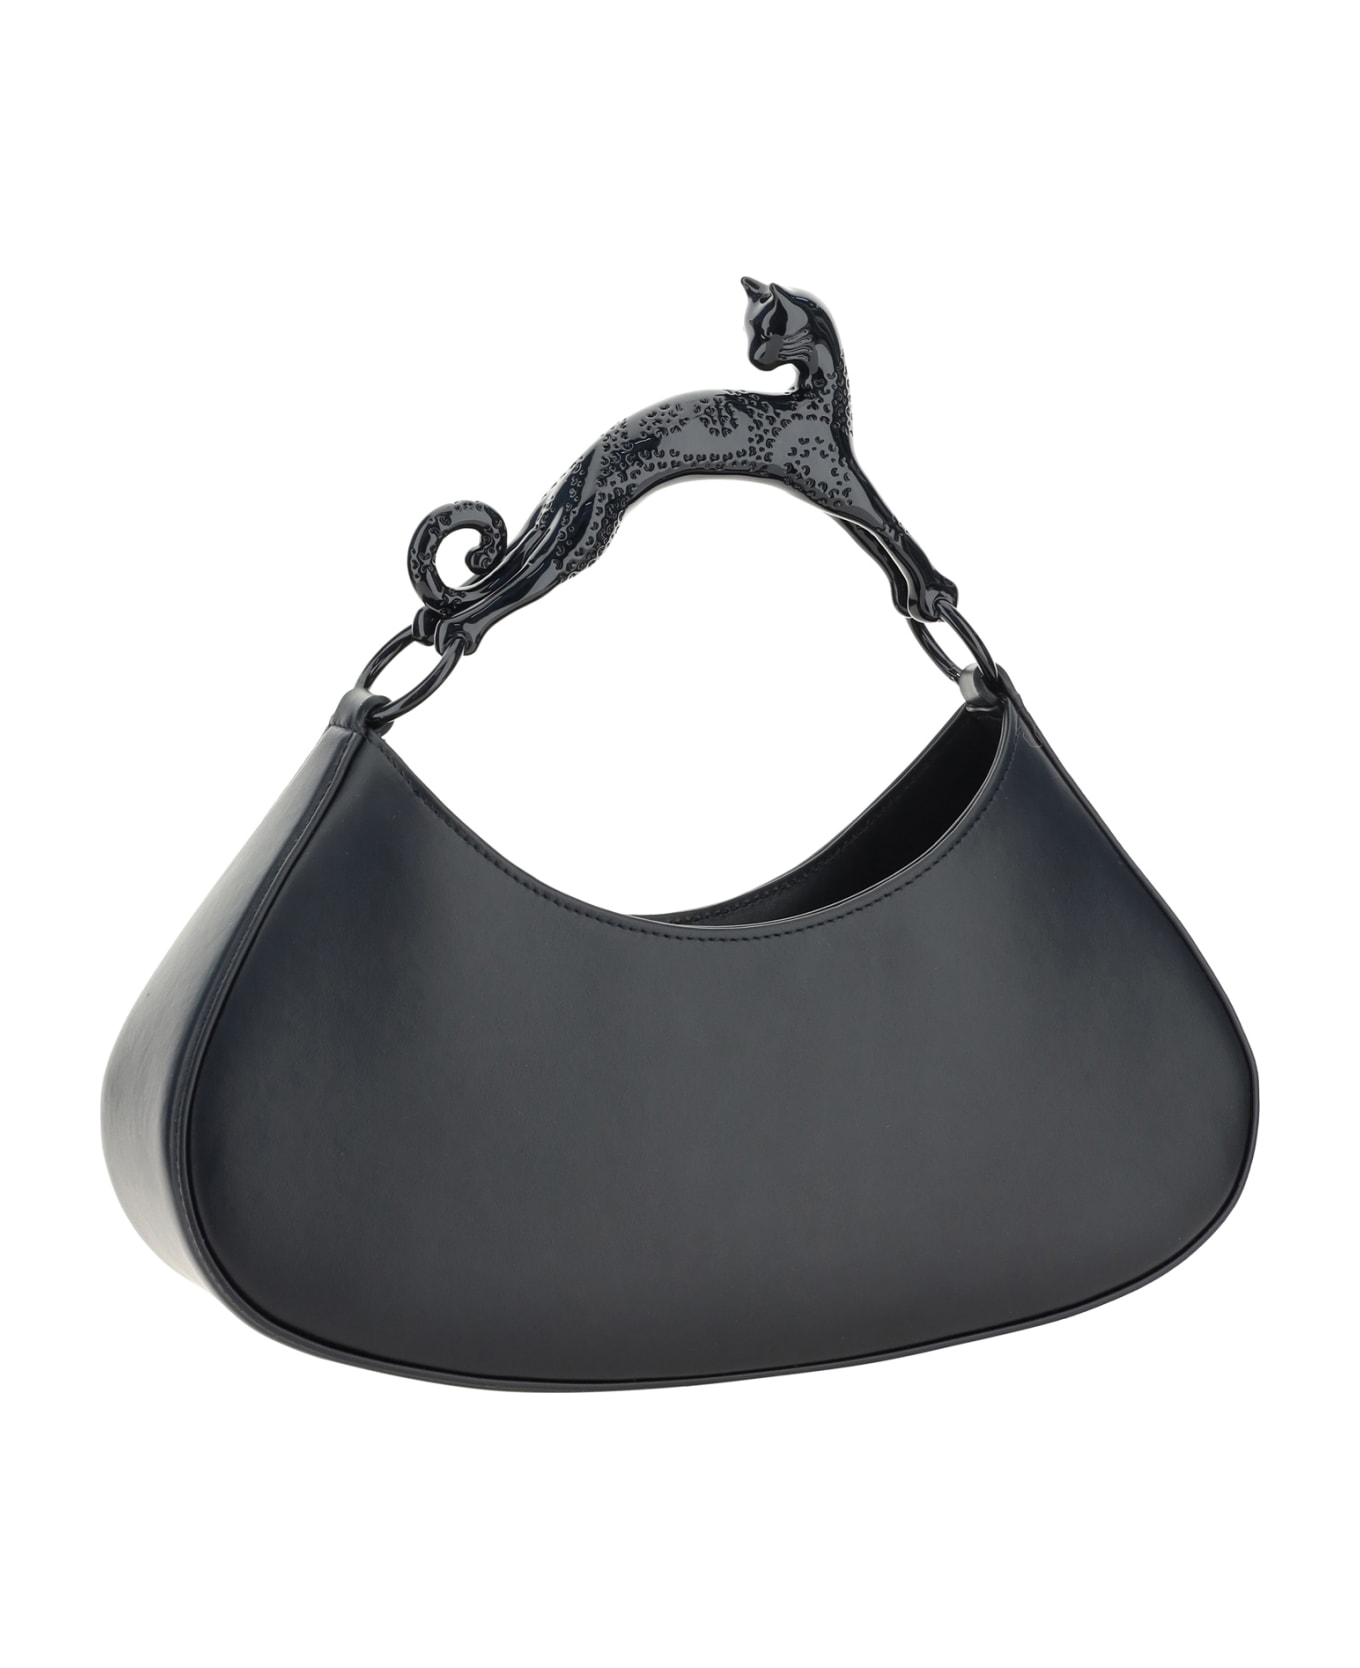 Lanvin Large Hobo Handbag - Black